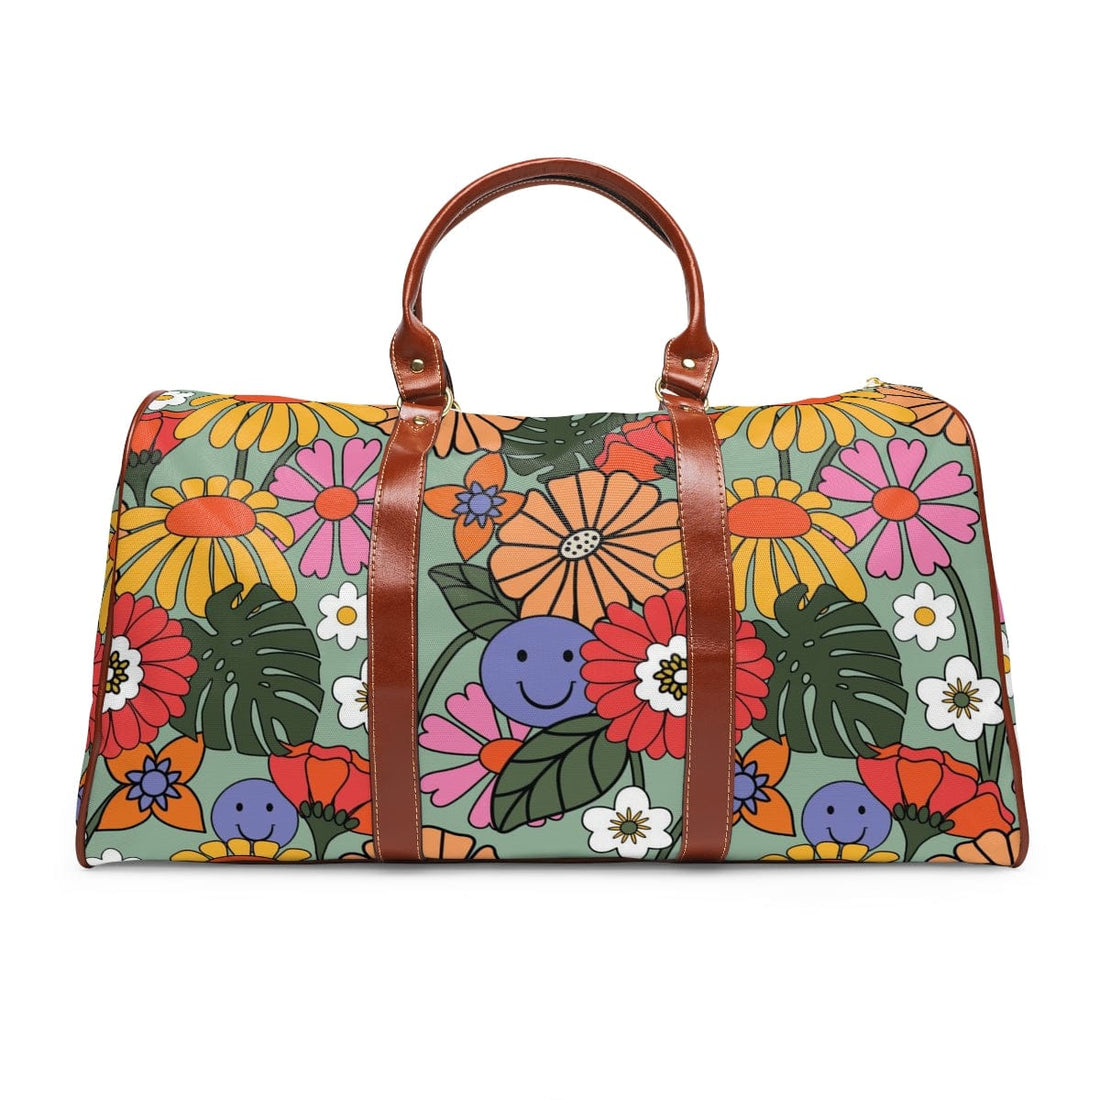 Flower Power Groovy Travel Bag, Weekender, Hipster Mod Daisy, Brown,  Orange, Green, Hippie, 70's Style, Waterproof Travel Bag - 7599343468699